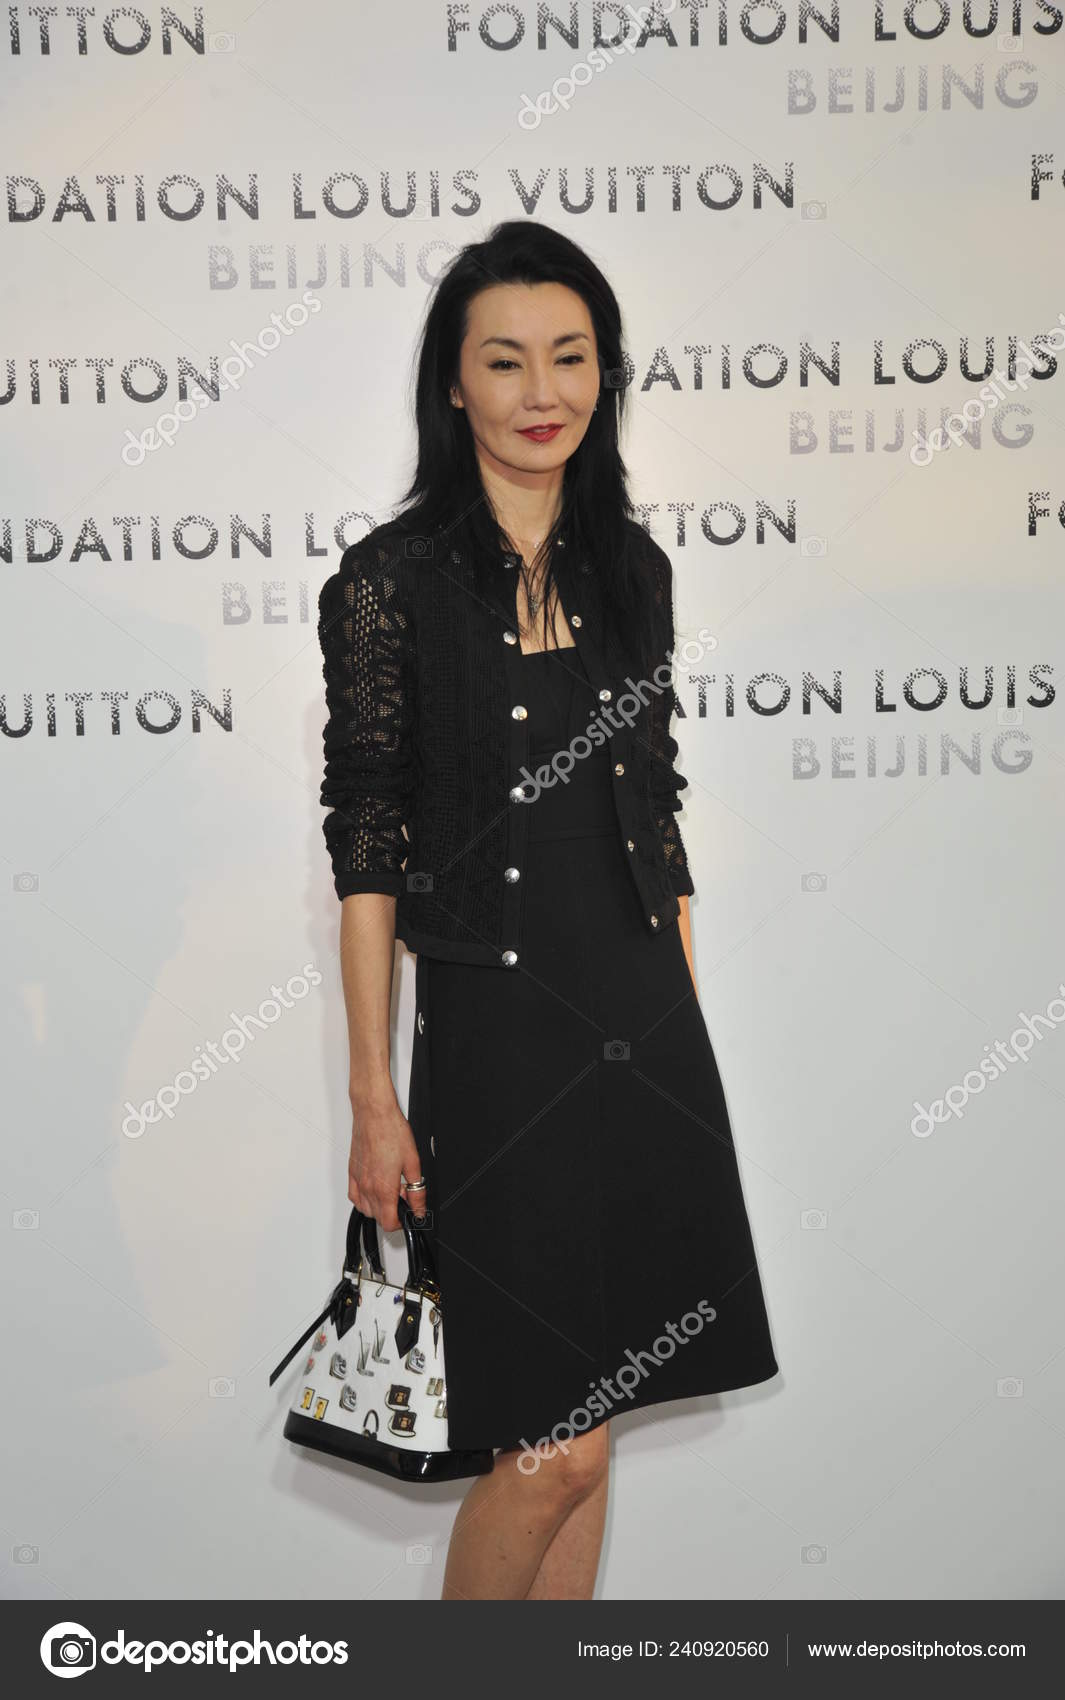 Louis Vuitton - Actress Gong Li at the Louis Vuitton Cruise Show